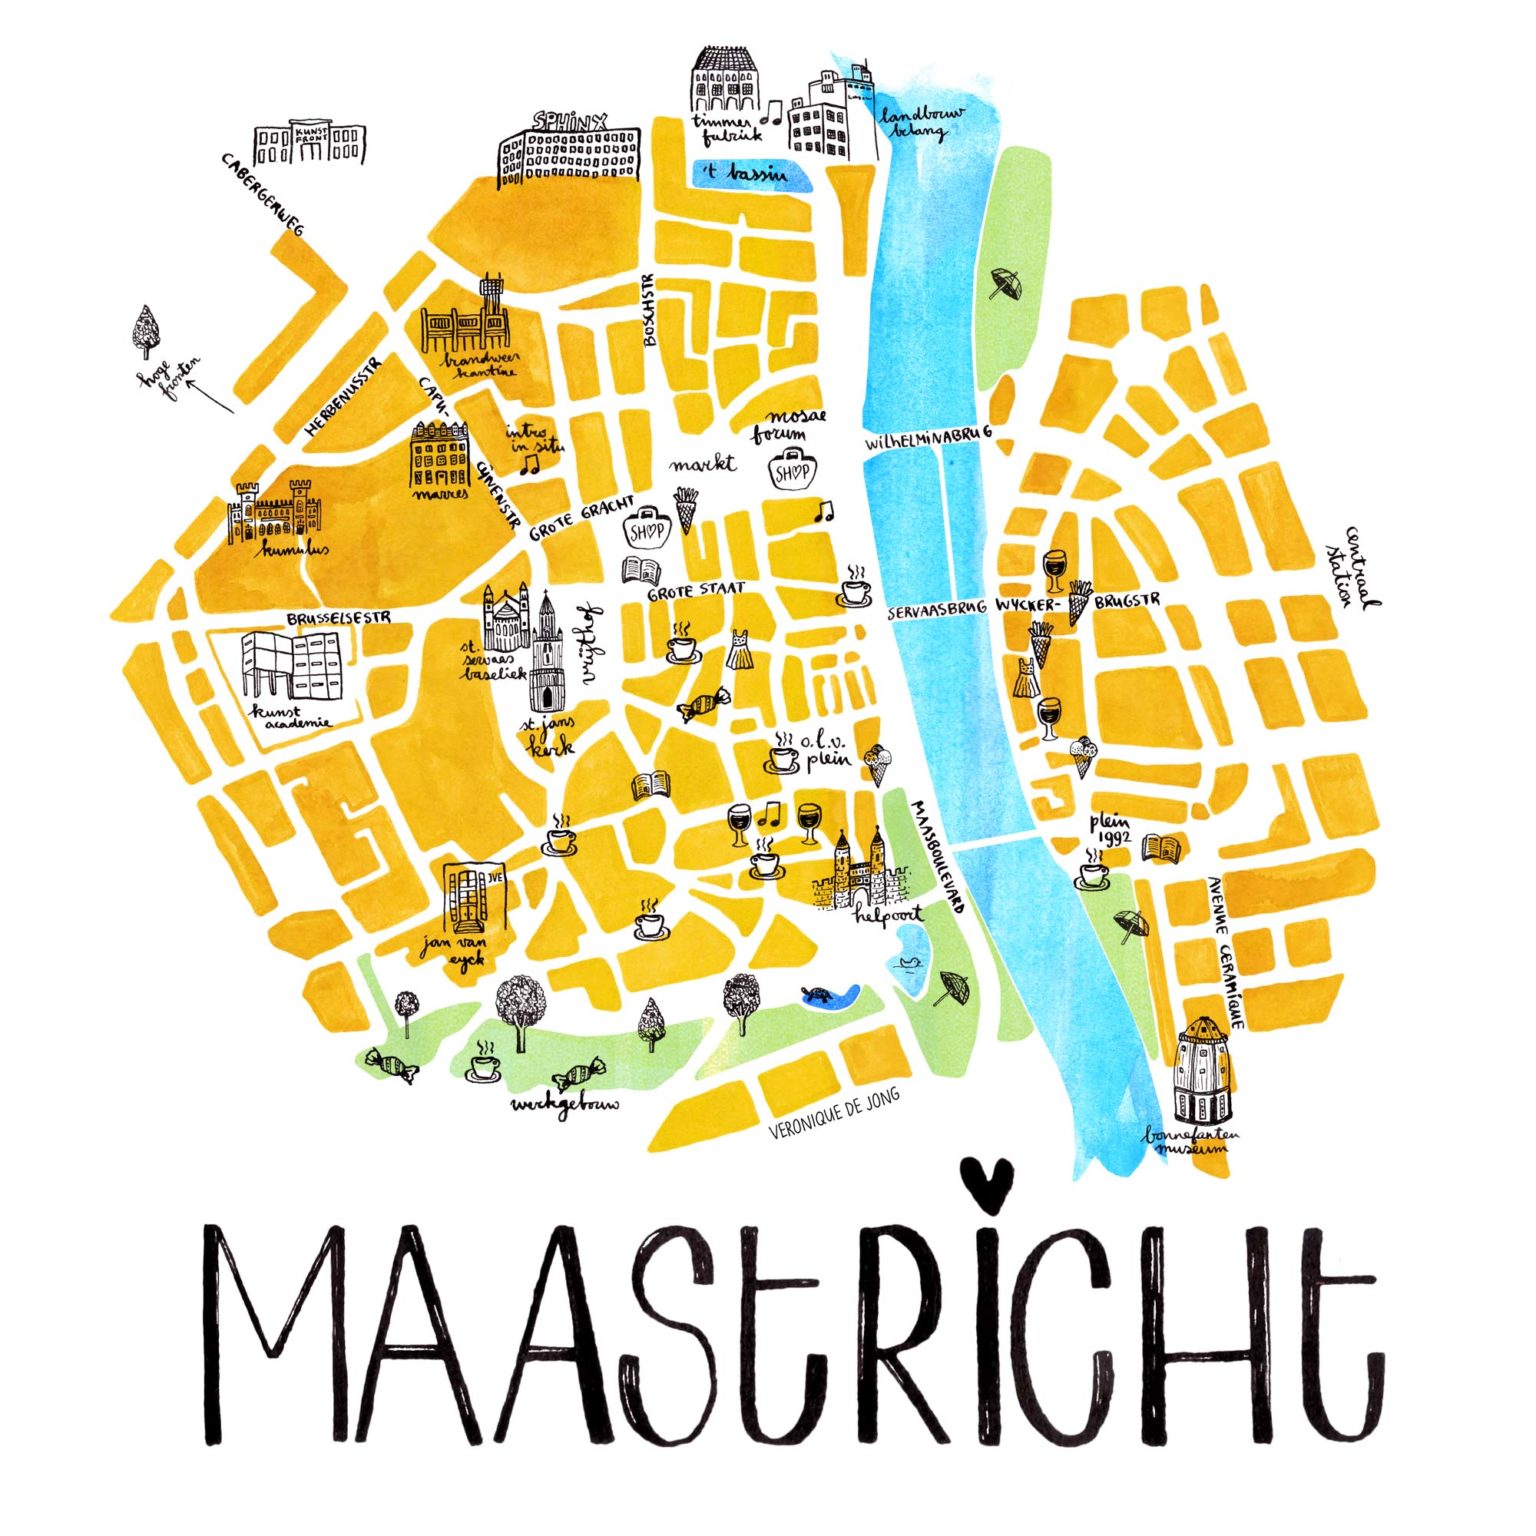 Maastricht Map LR 1536x1536 